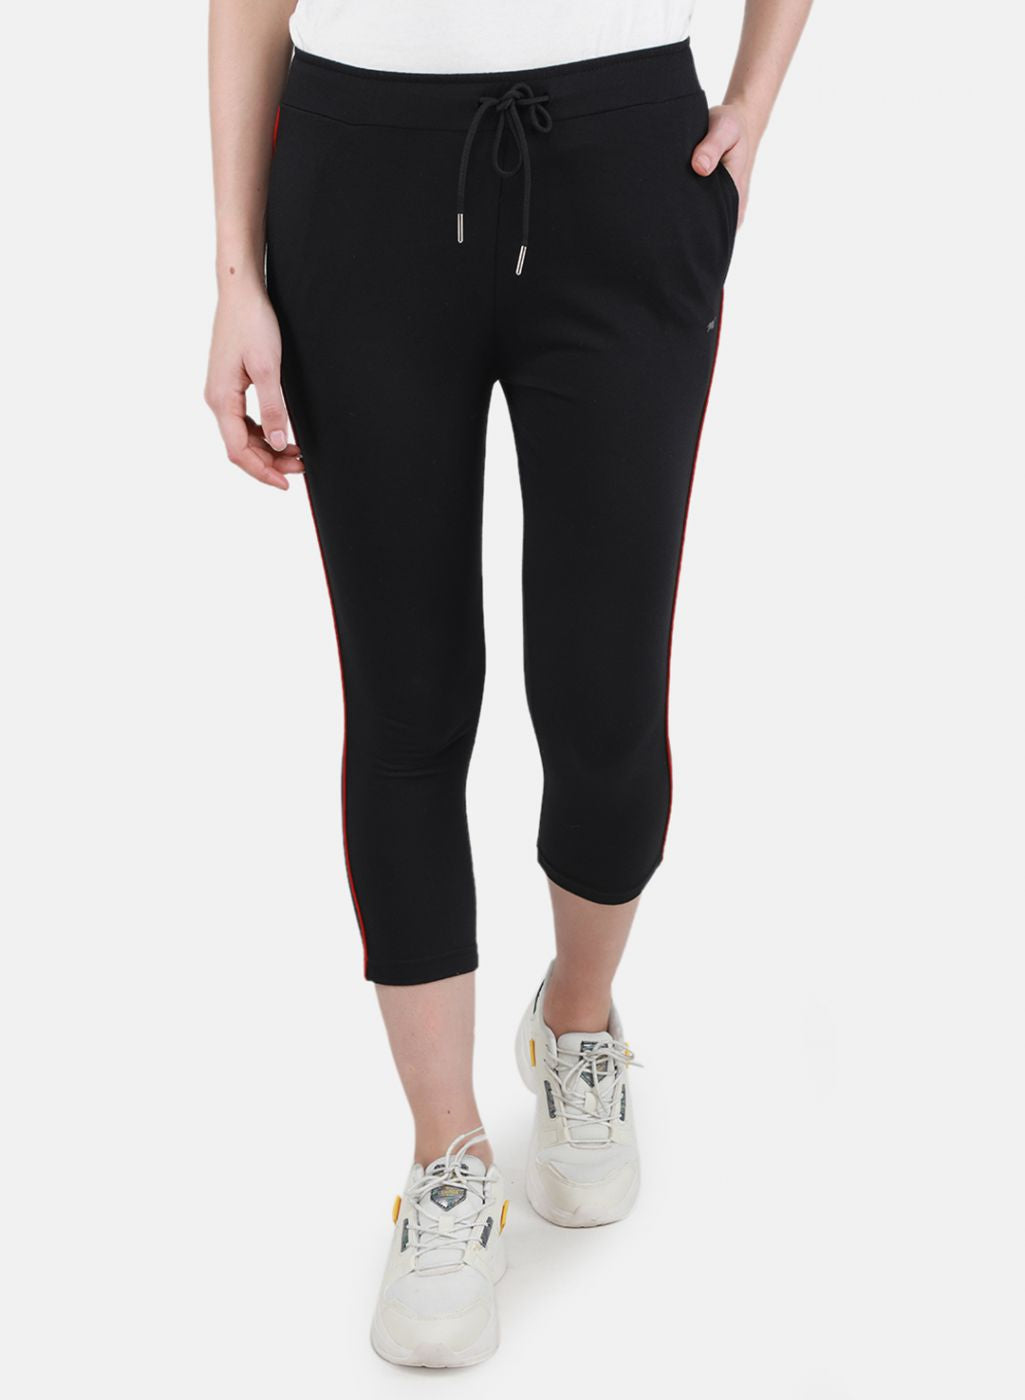 Jockey Women's Size S Black Capri Athletic Activewear Pants 14.5 Inseam